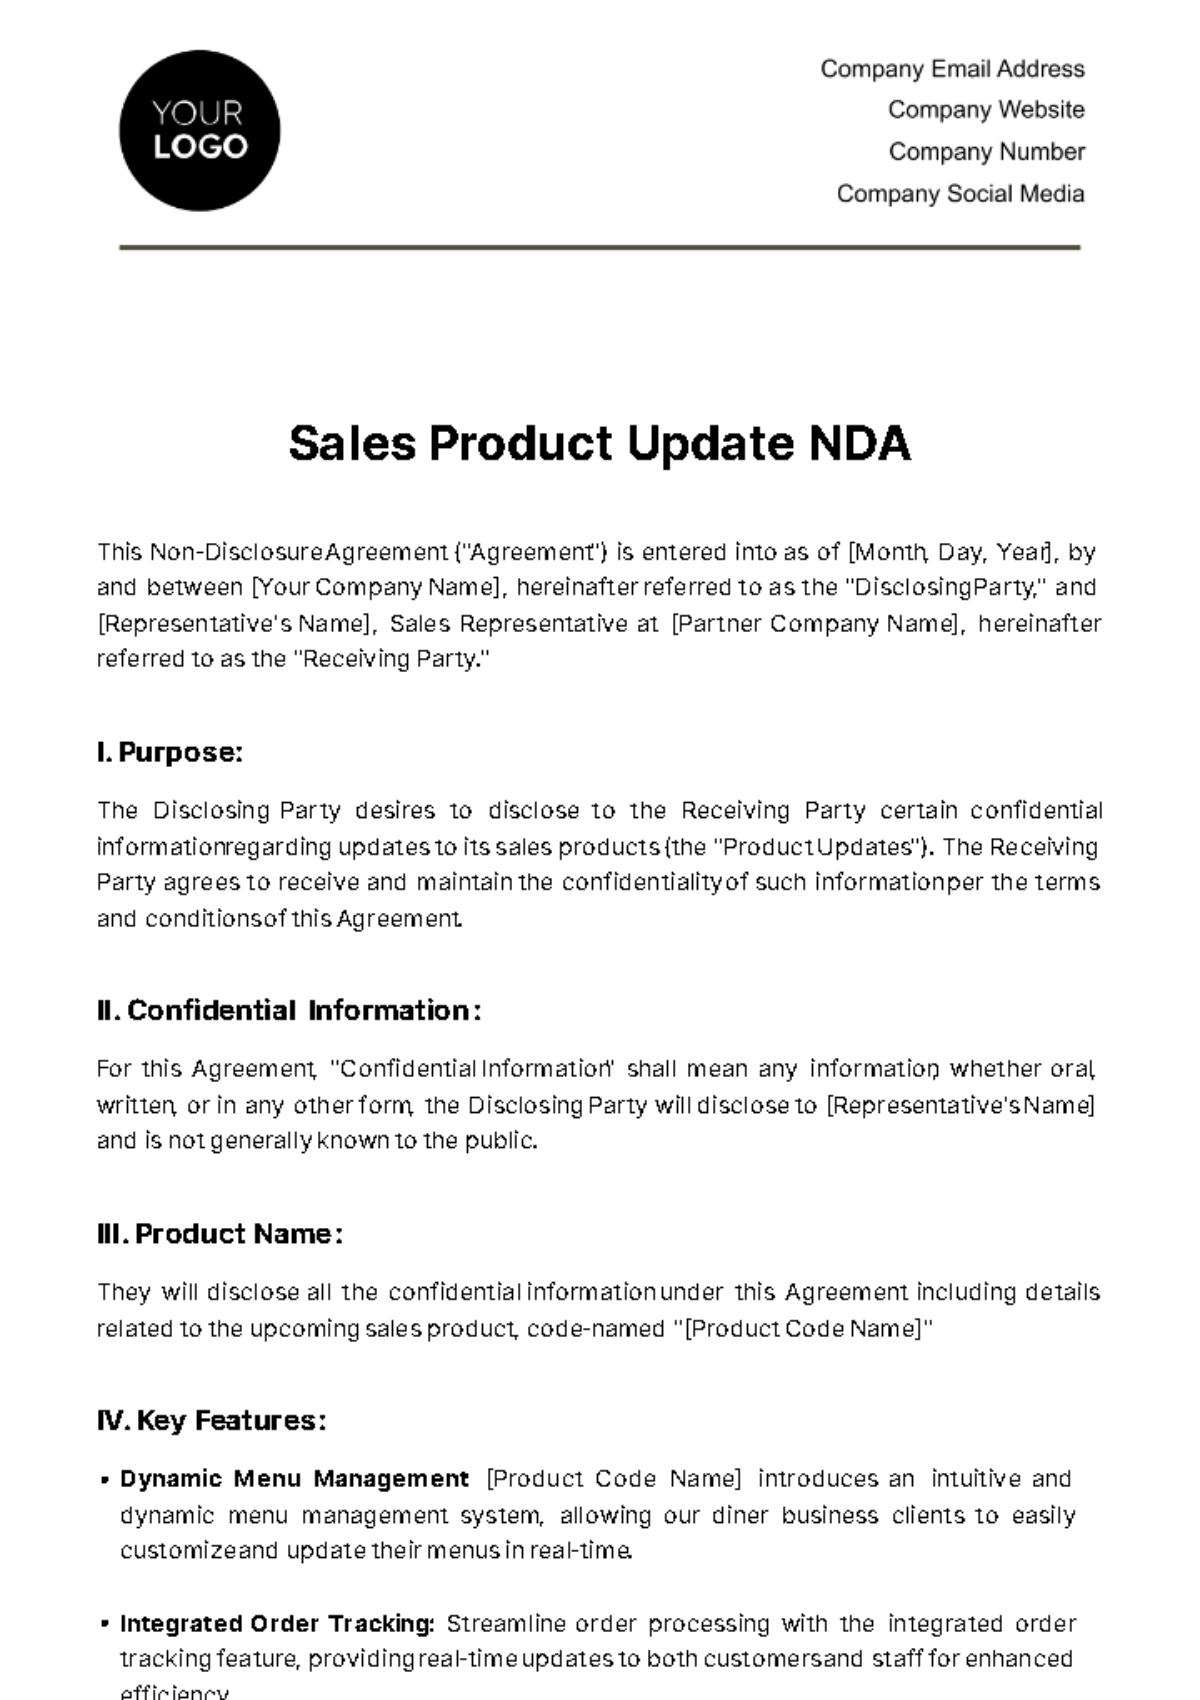 Free Sales Product Update NDA Template